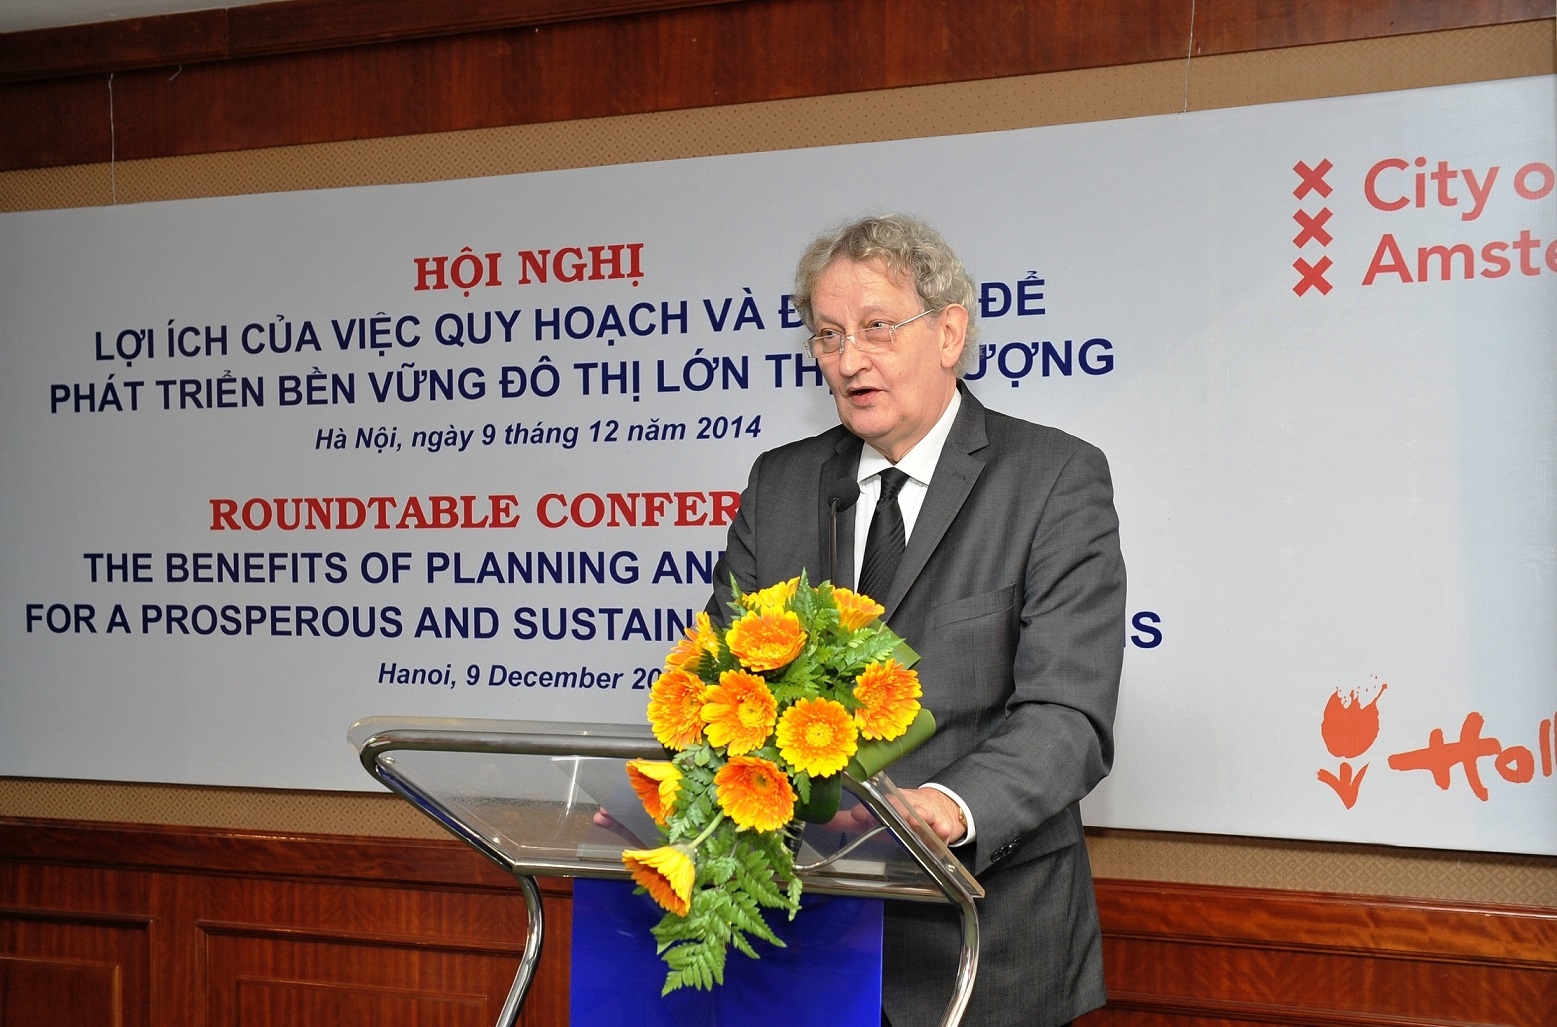 Amsterdam mayor in Hanoi to promote green metropolitan solutions